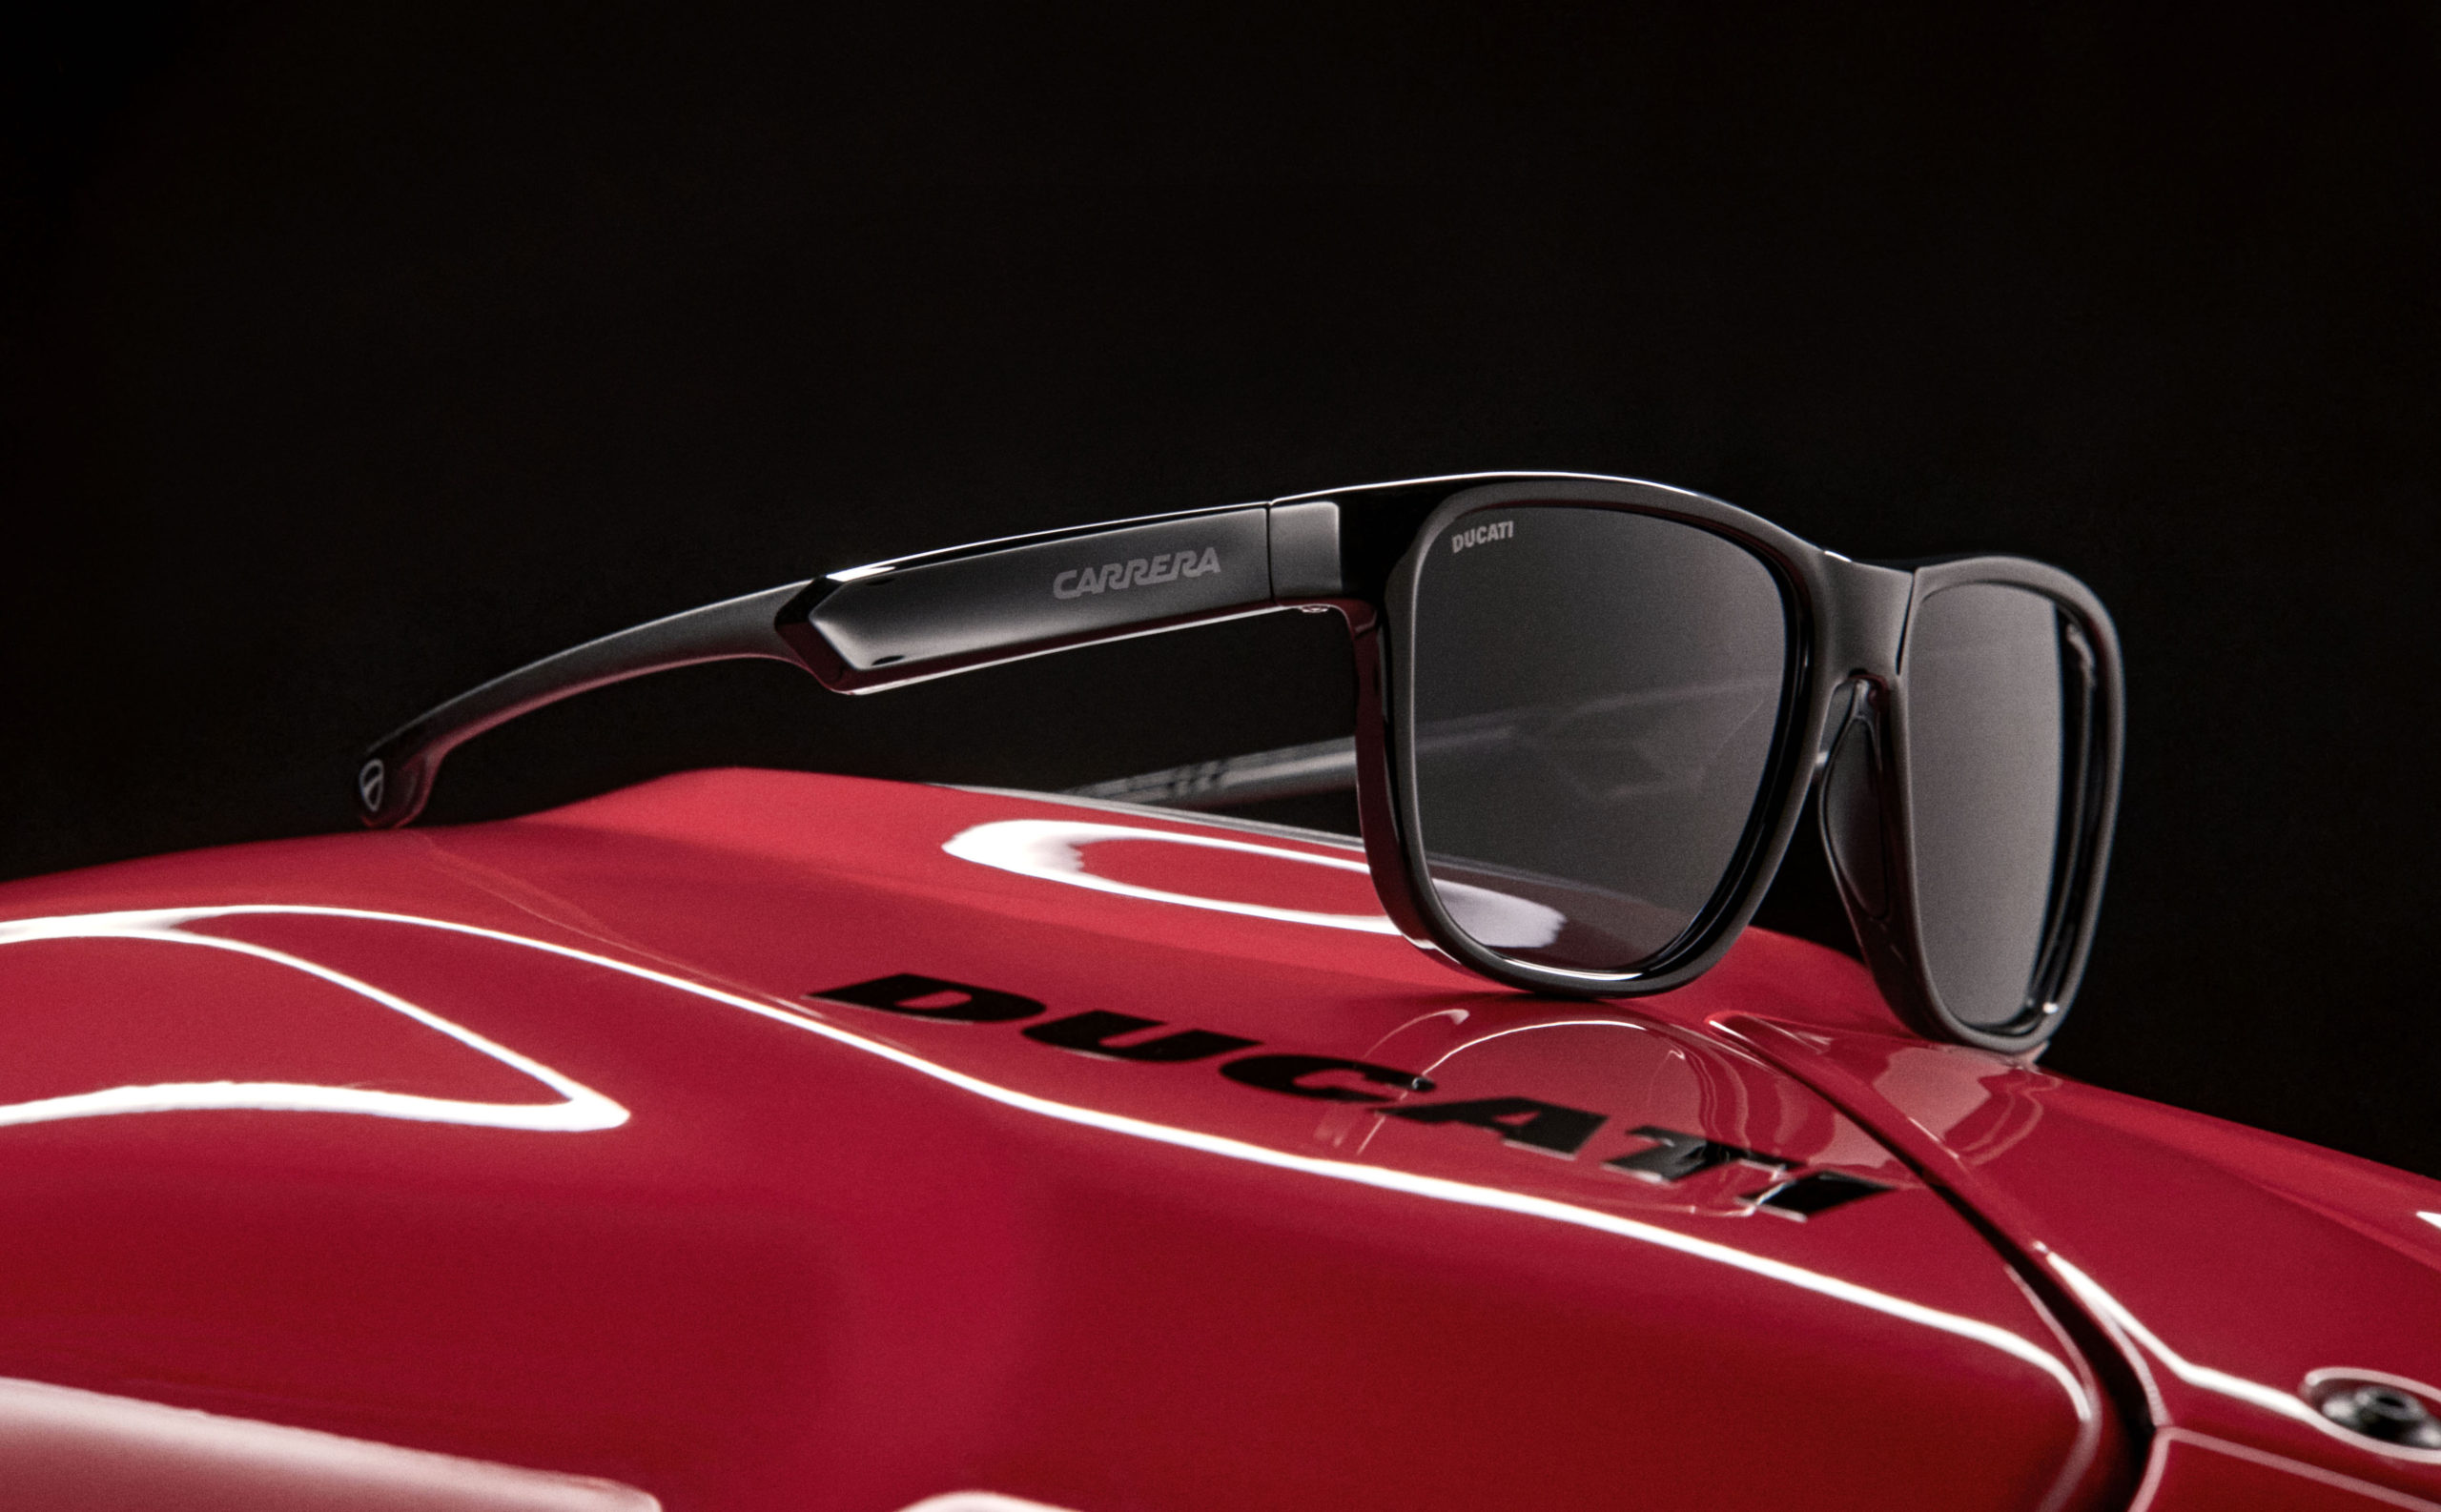 Introducing the Carrera|Ducati Eyewear Collection